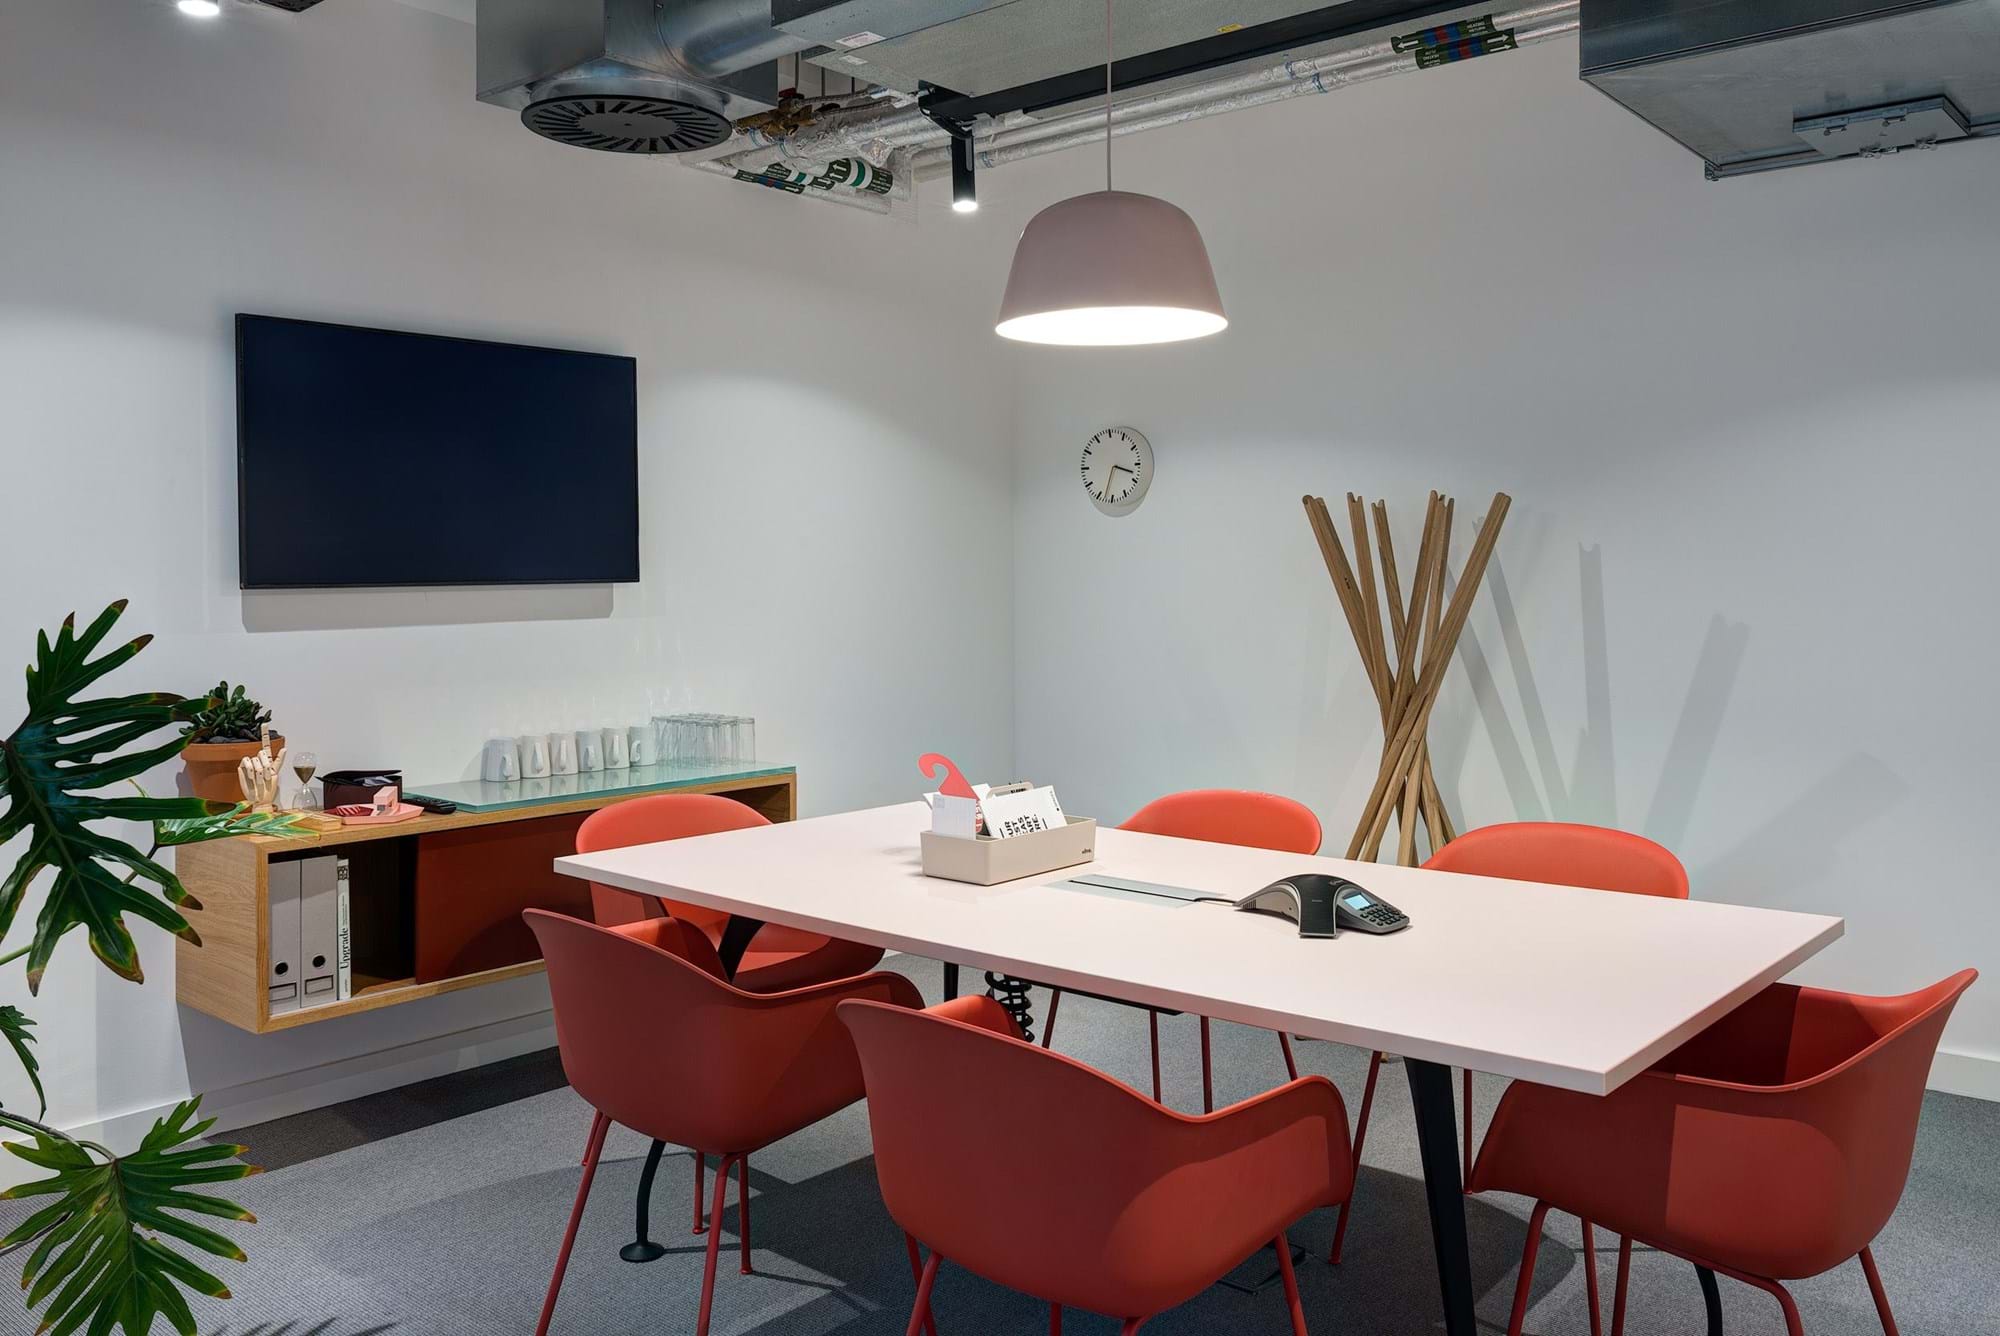 Modus Workspace office design, fit out and refurbishment - Regus spaces Epworth - Spaces Epworth 26 highres sRGB.jpg